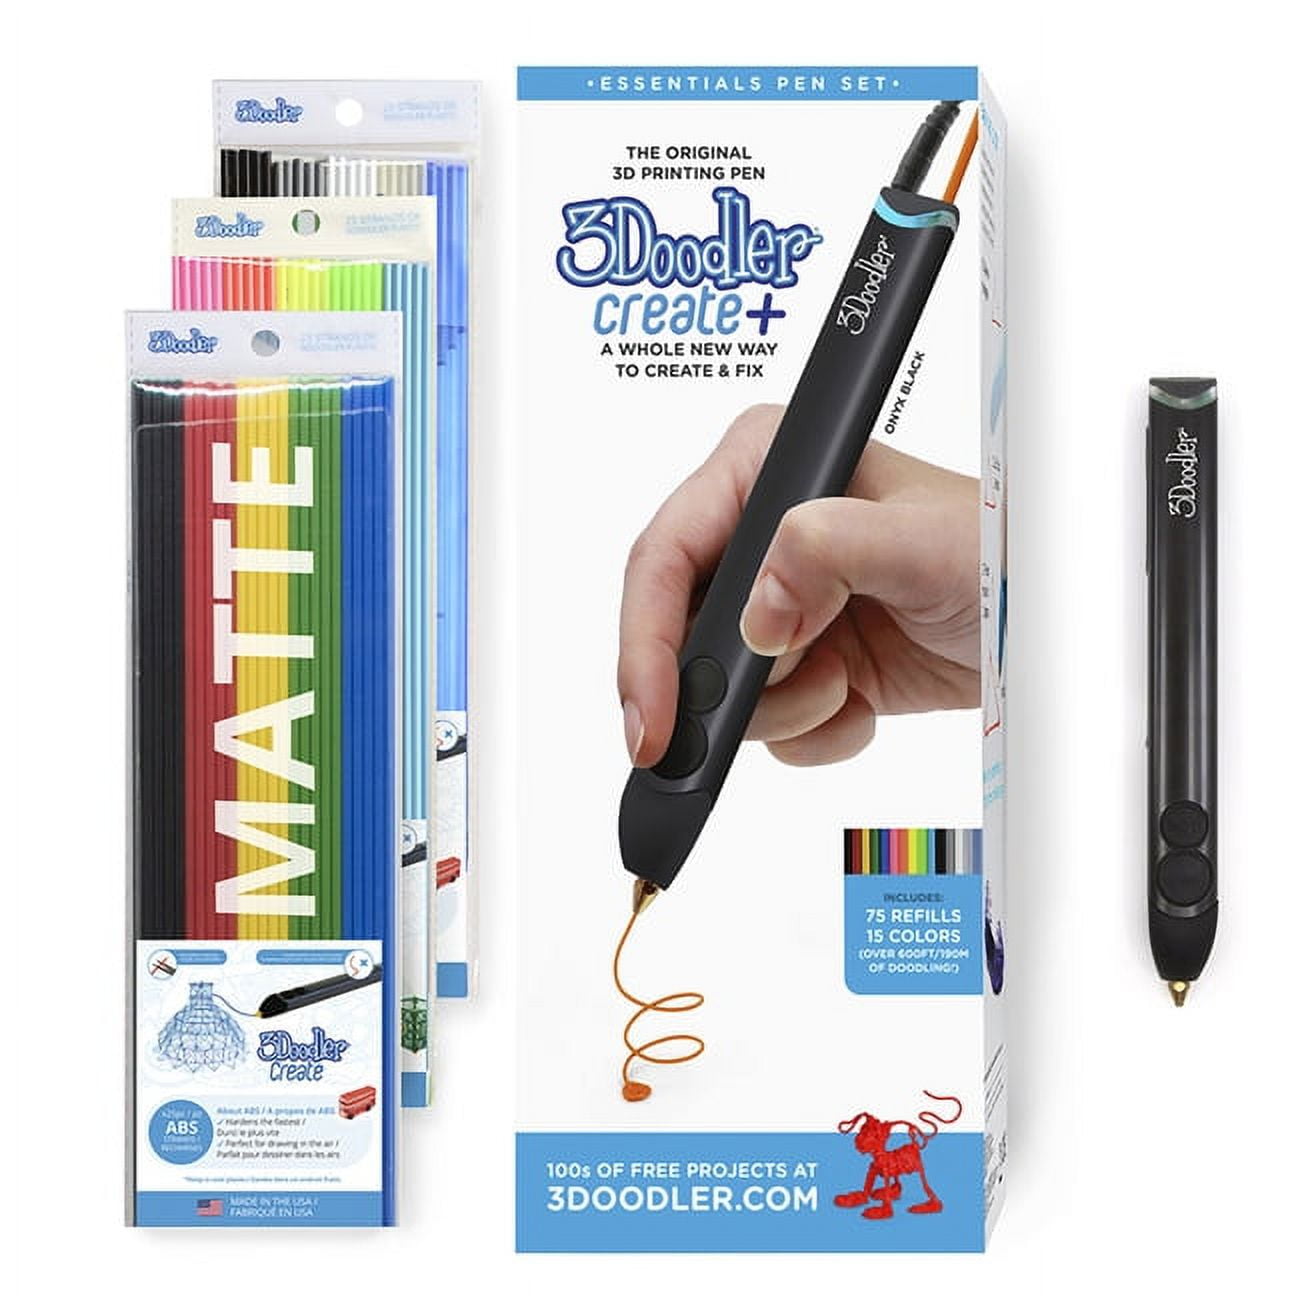 3Doodler Create+ (Black) Essential Pen Set withplug - Walmart.com